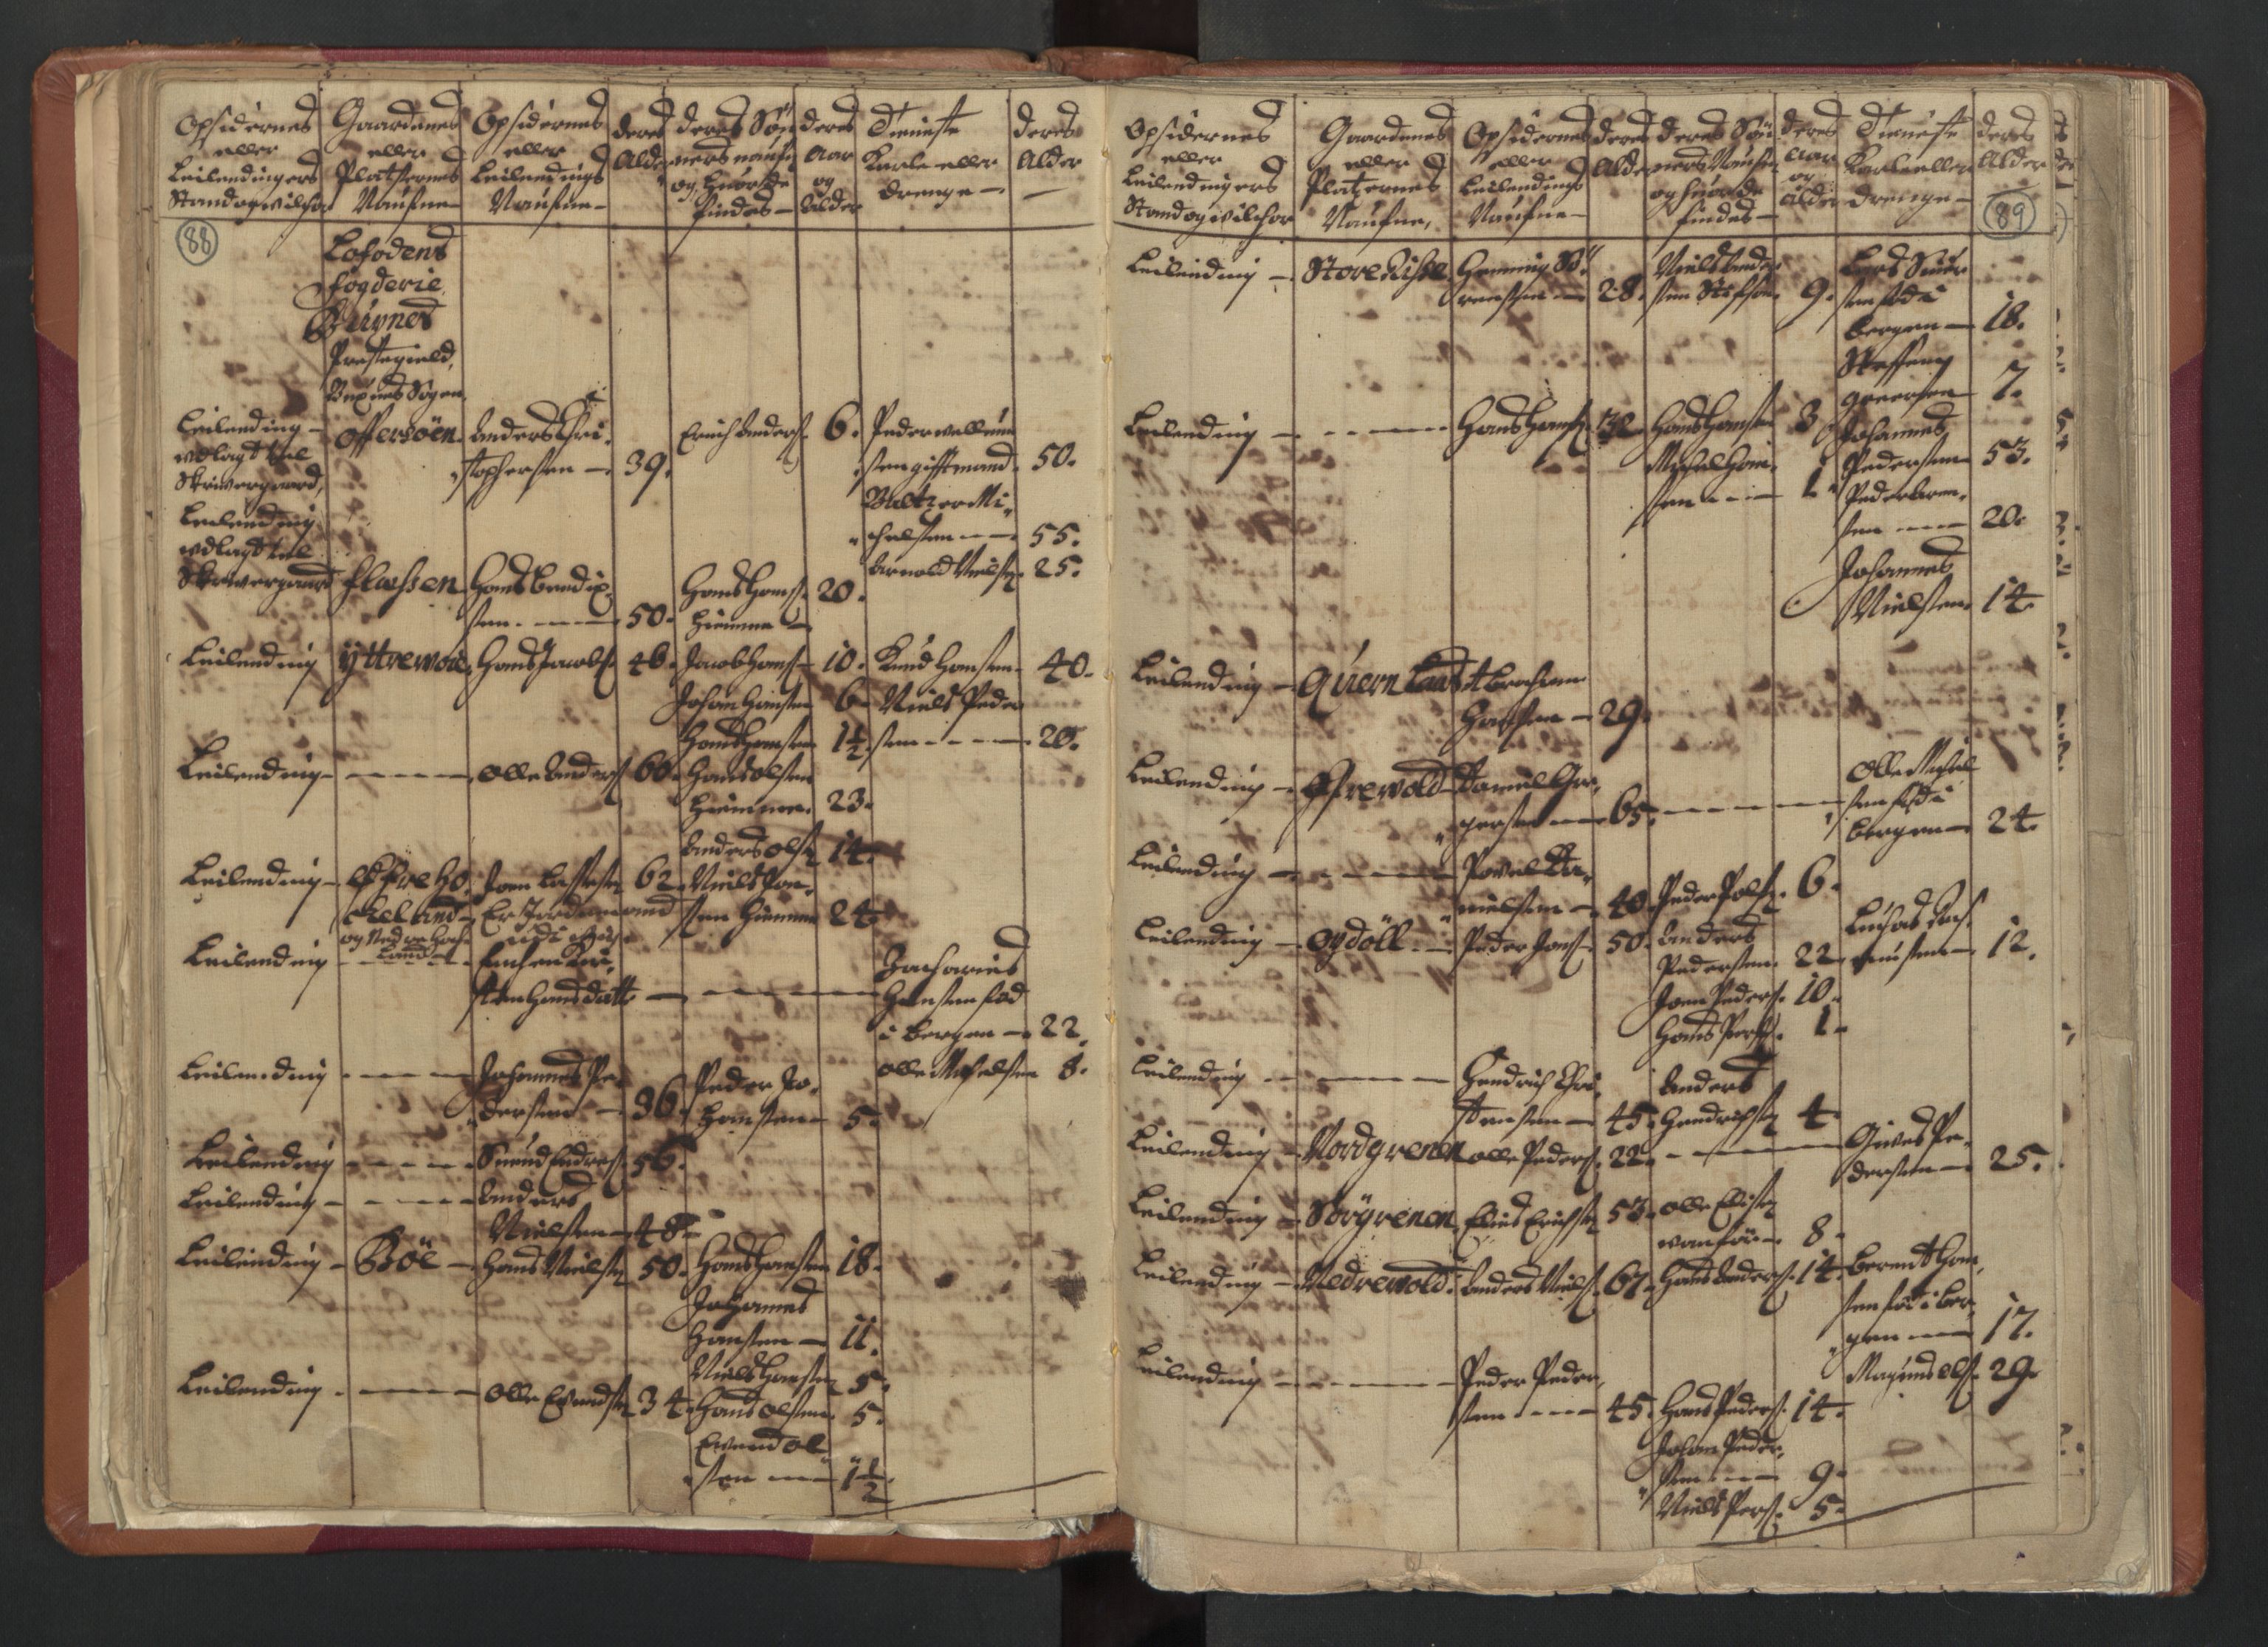 RA, Manntallet 1701, nr. 18: Vesterålen, Andenes og Lofoten fogderi, 1701, s. 88-89